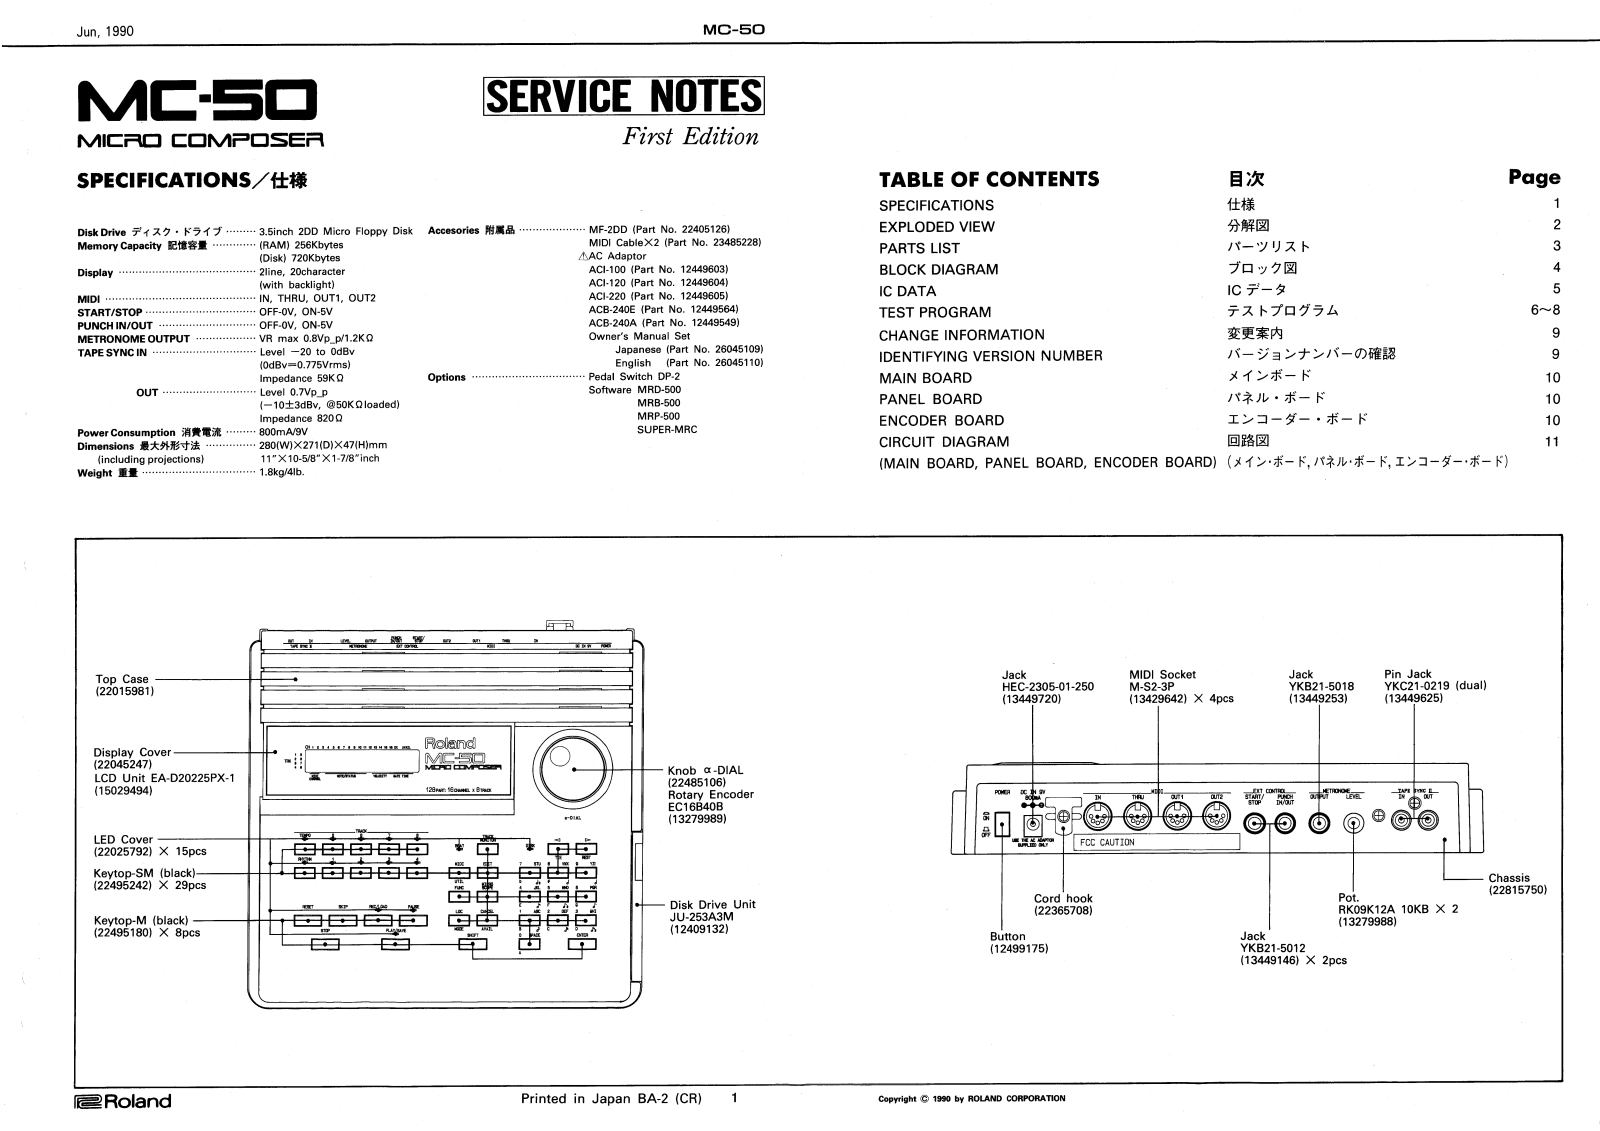 Roland MC-50 Service Manual